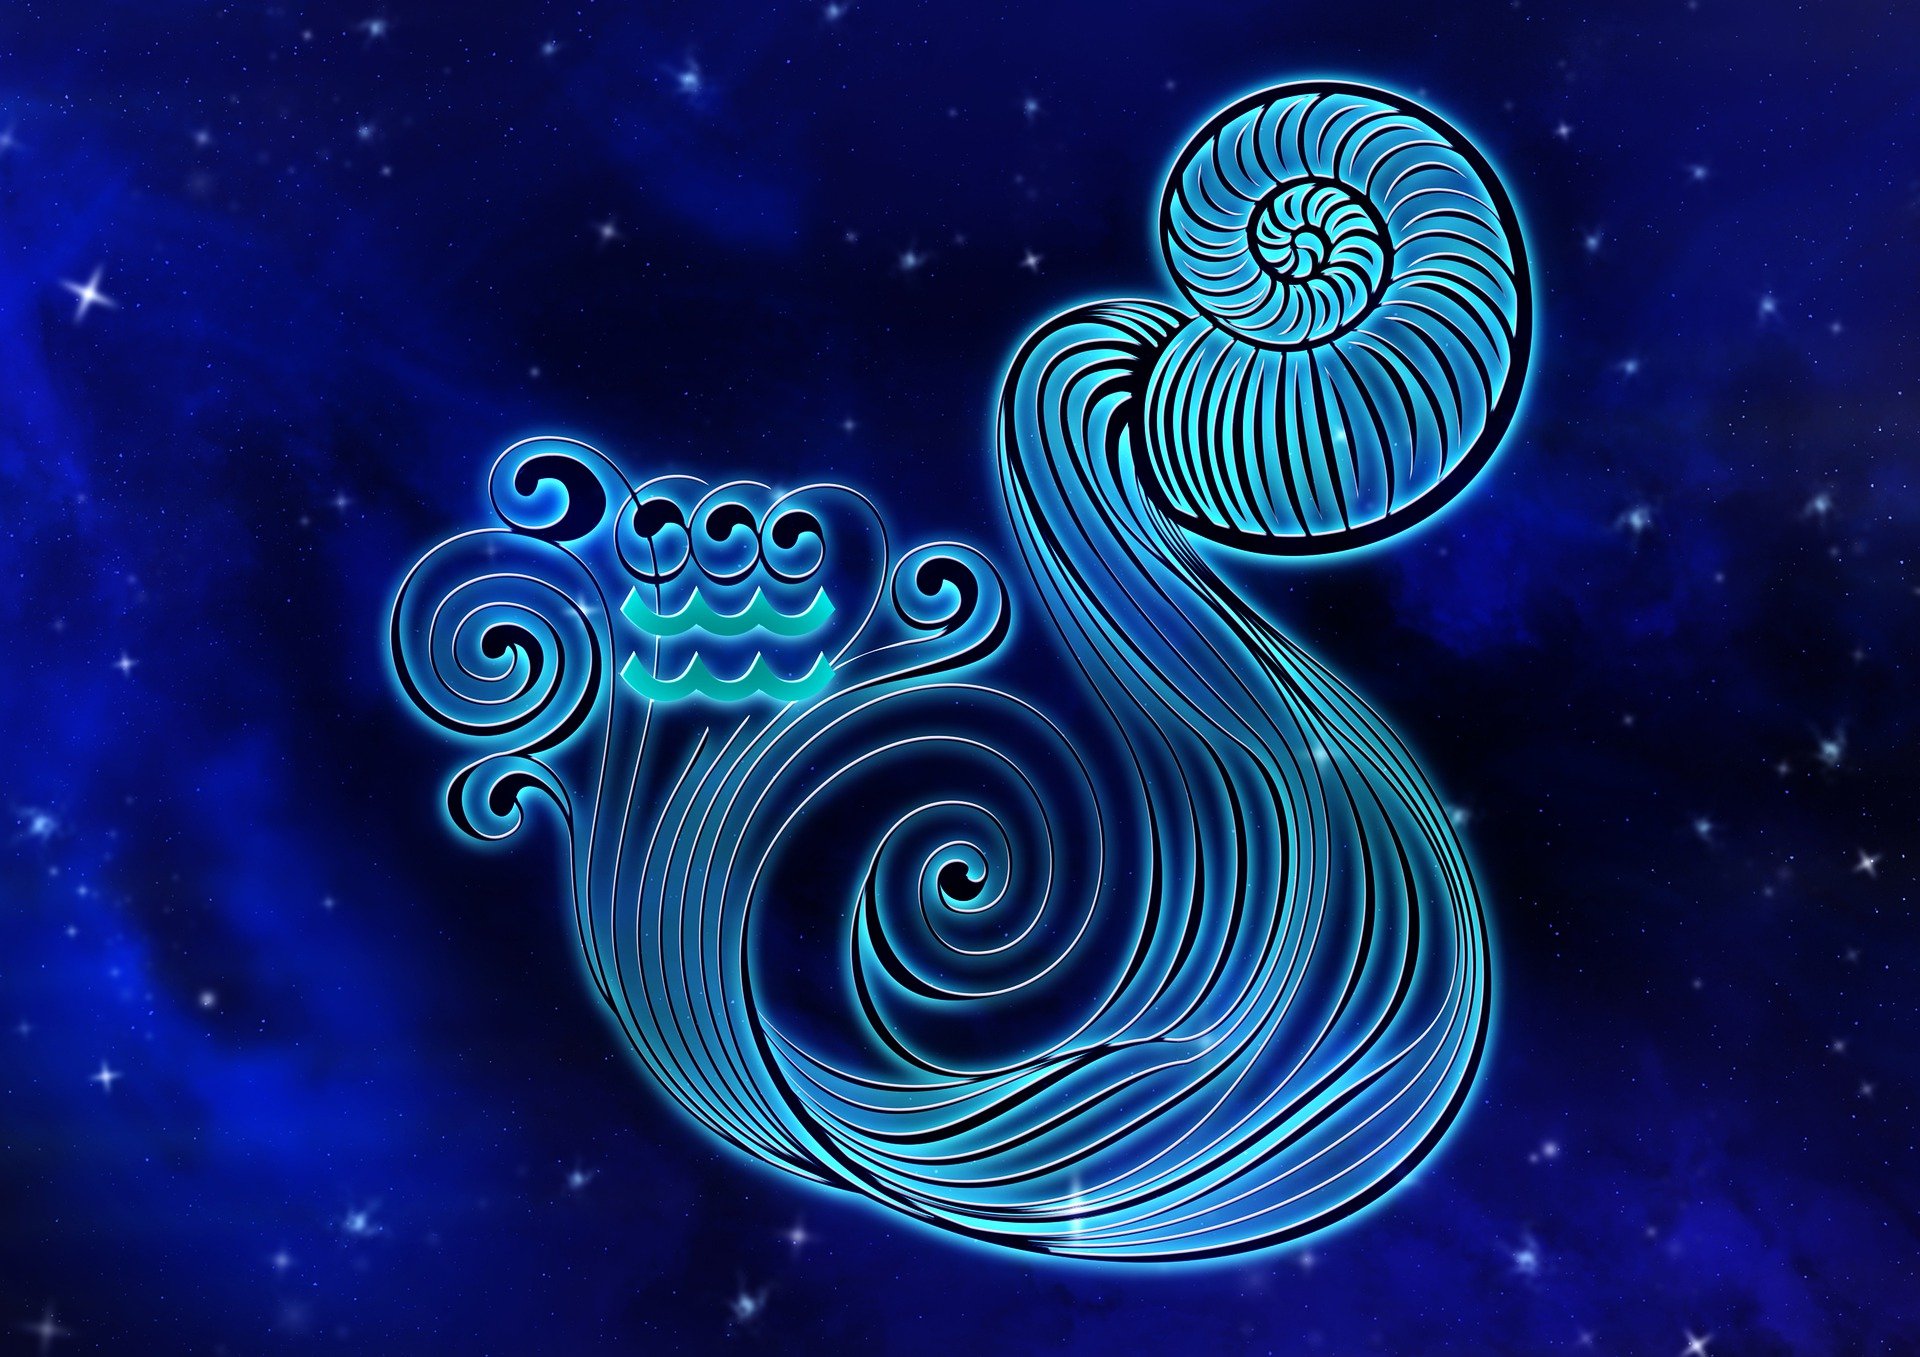 An illustration of an Aquarius star sign | Source: Pixabay 